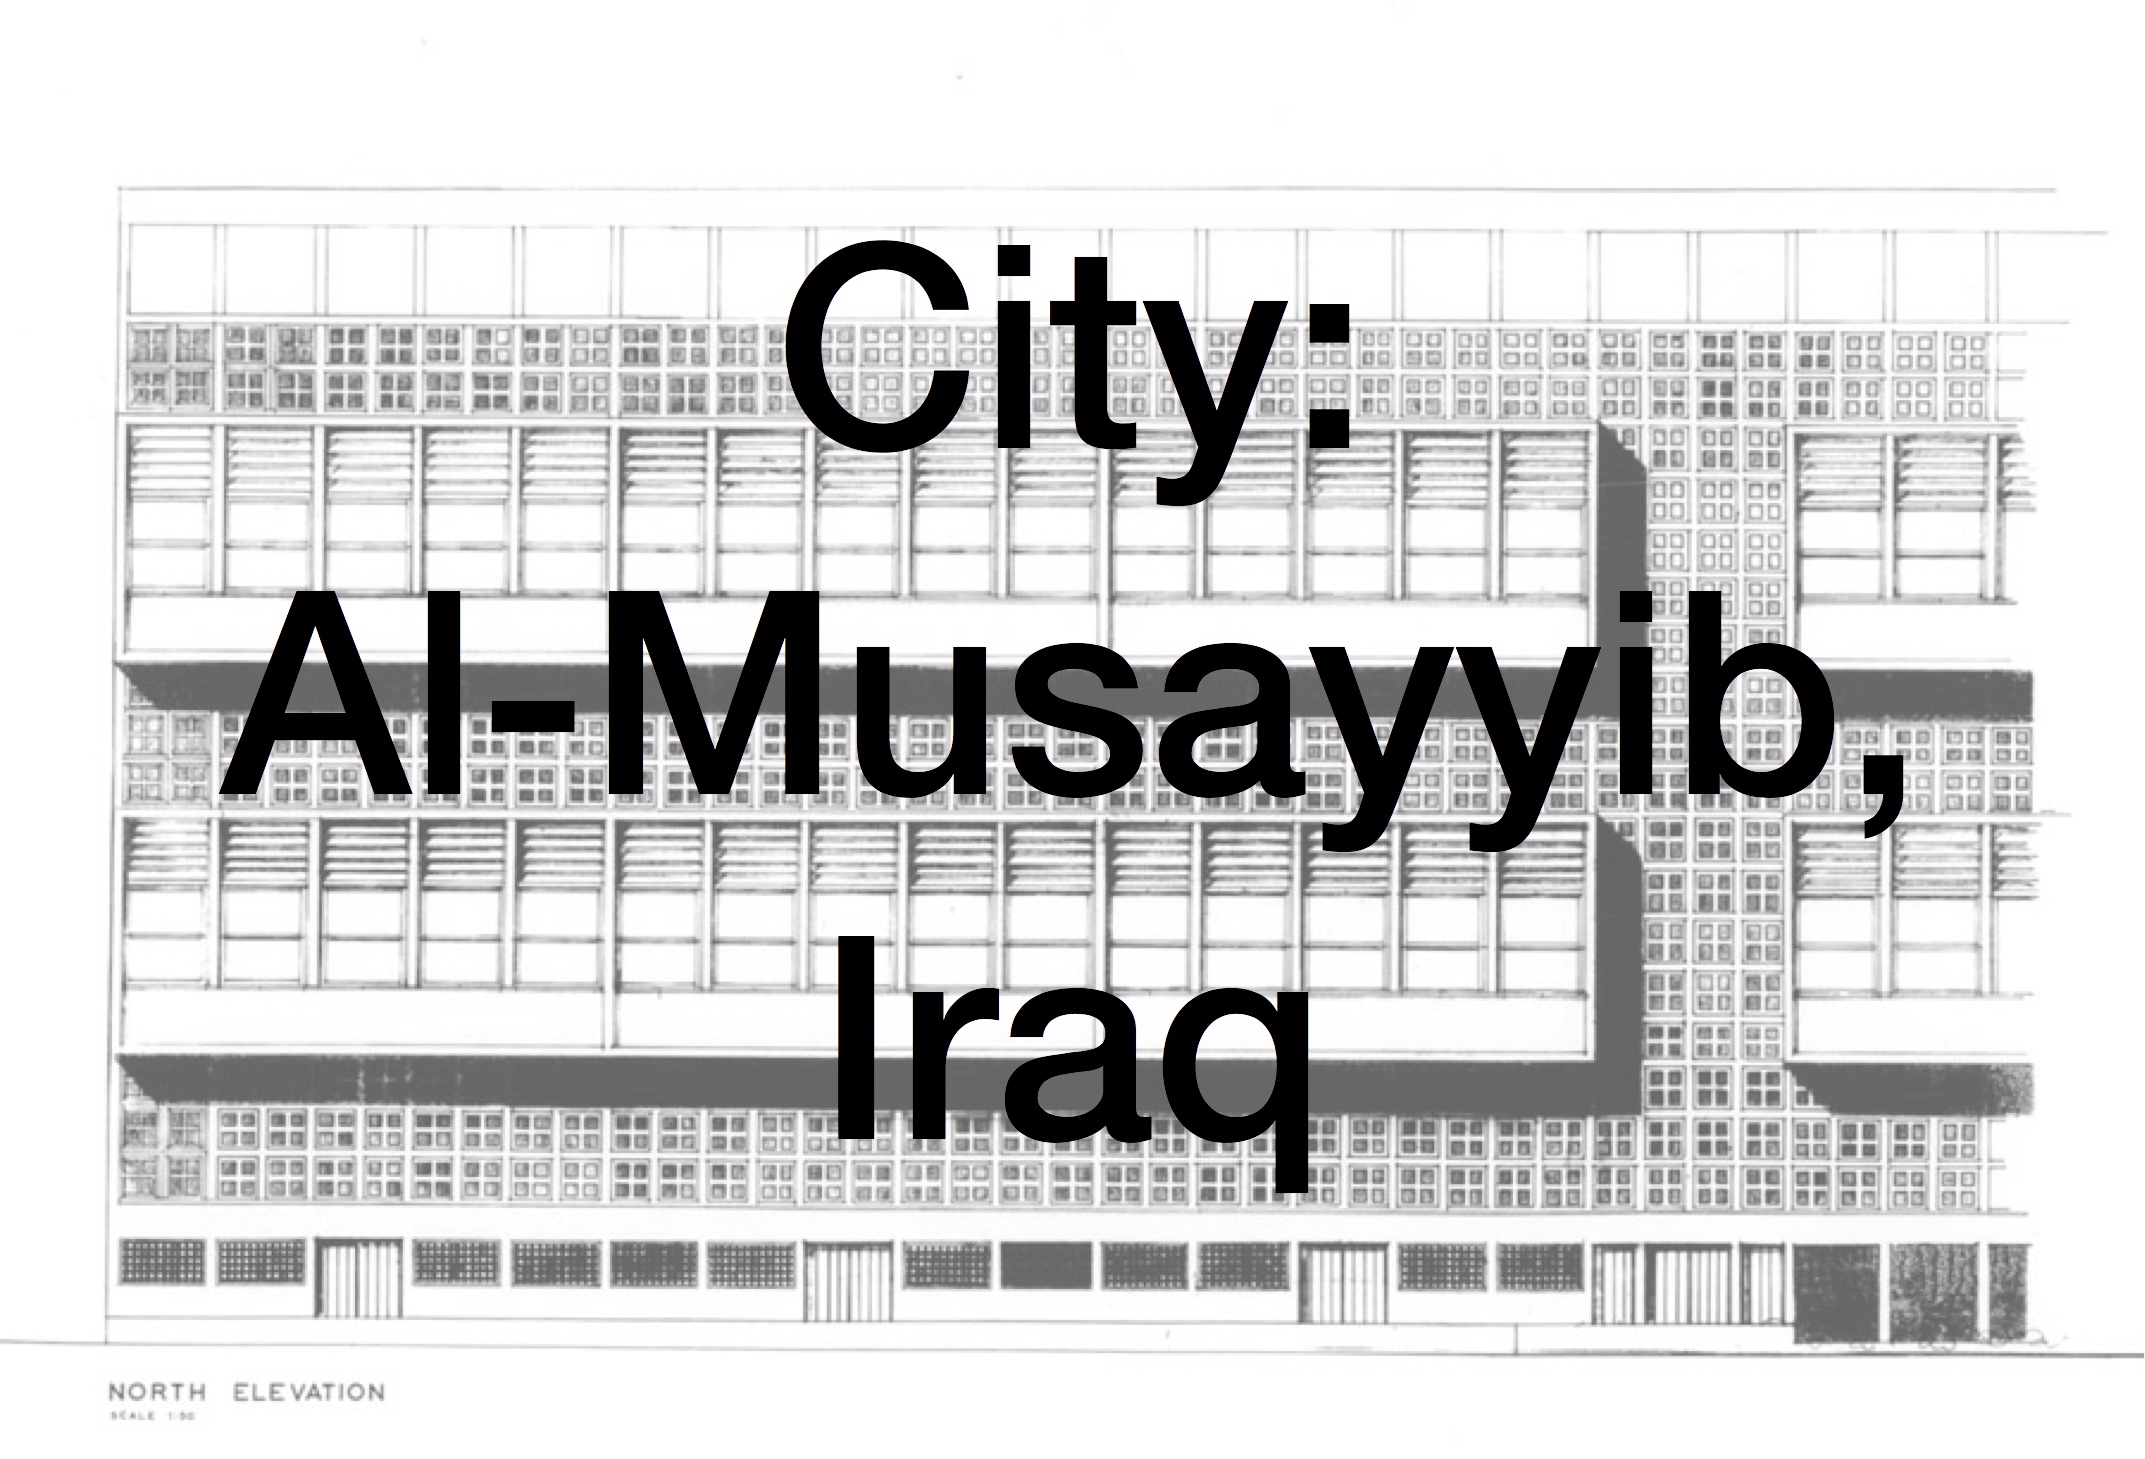  Al-Musayyib